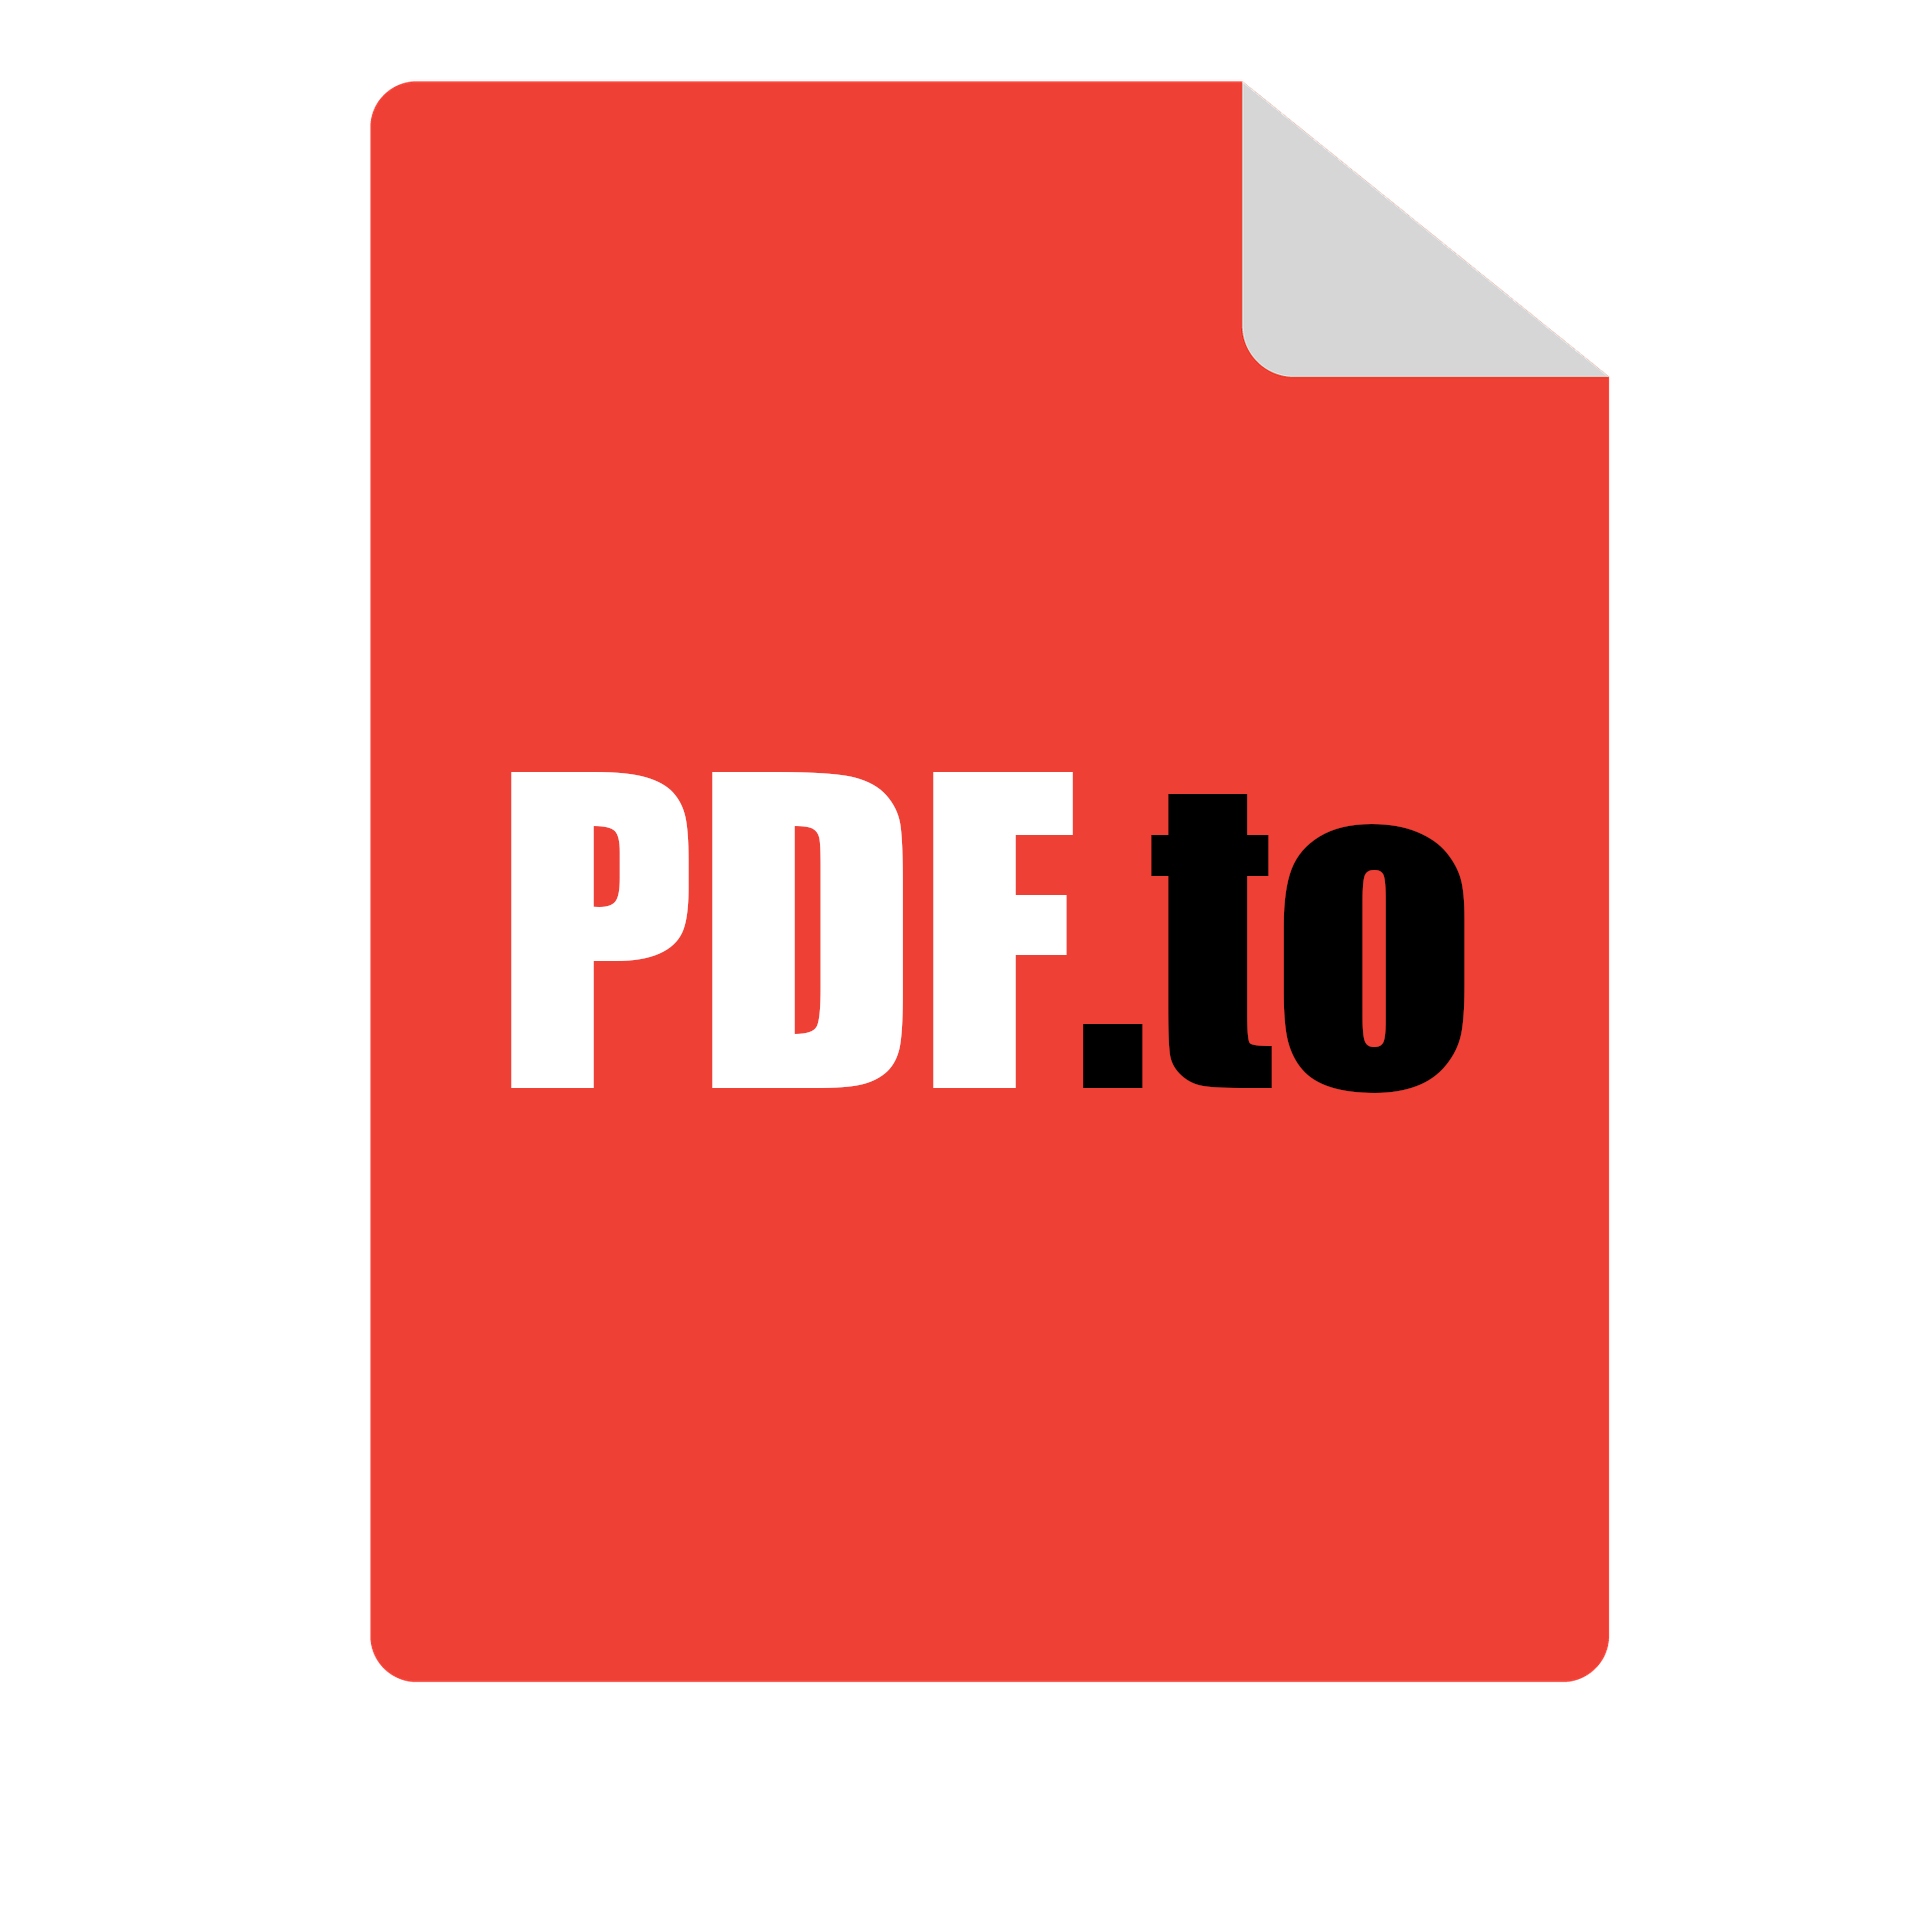 PDF to DOC